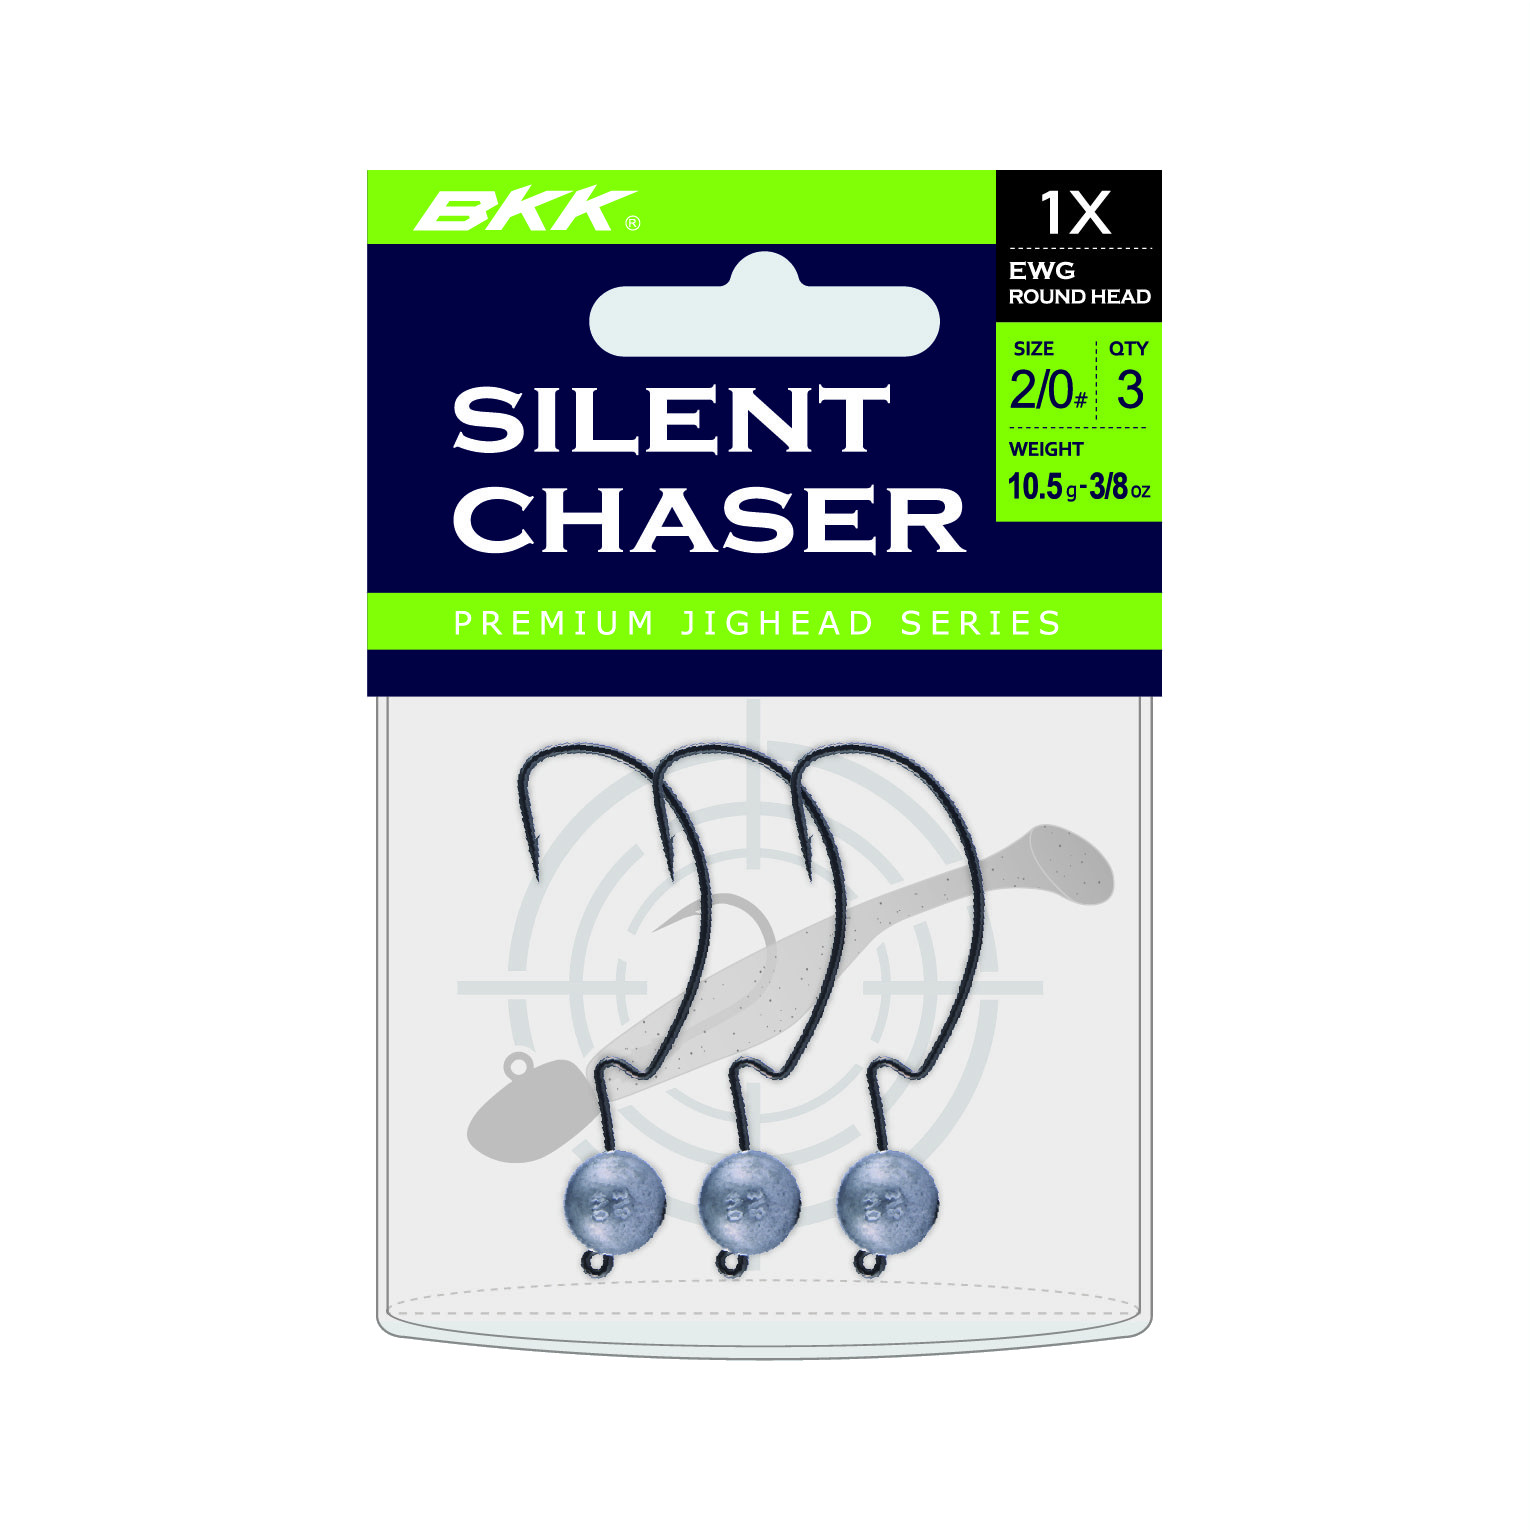 BKK Silent Chaser 1X EWG Round Head Cabeza de Plomo #2/0